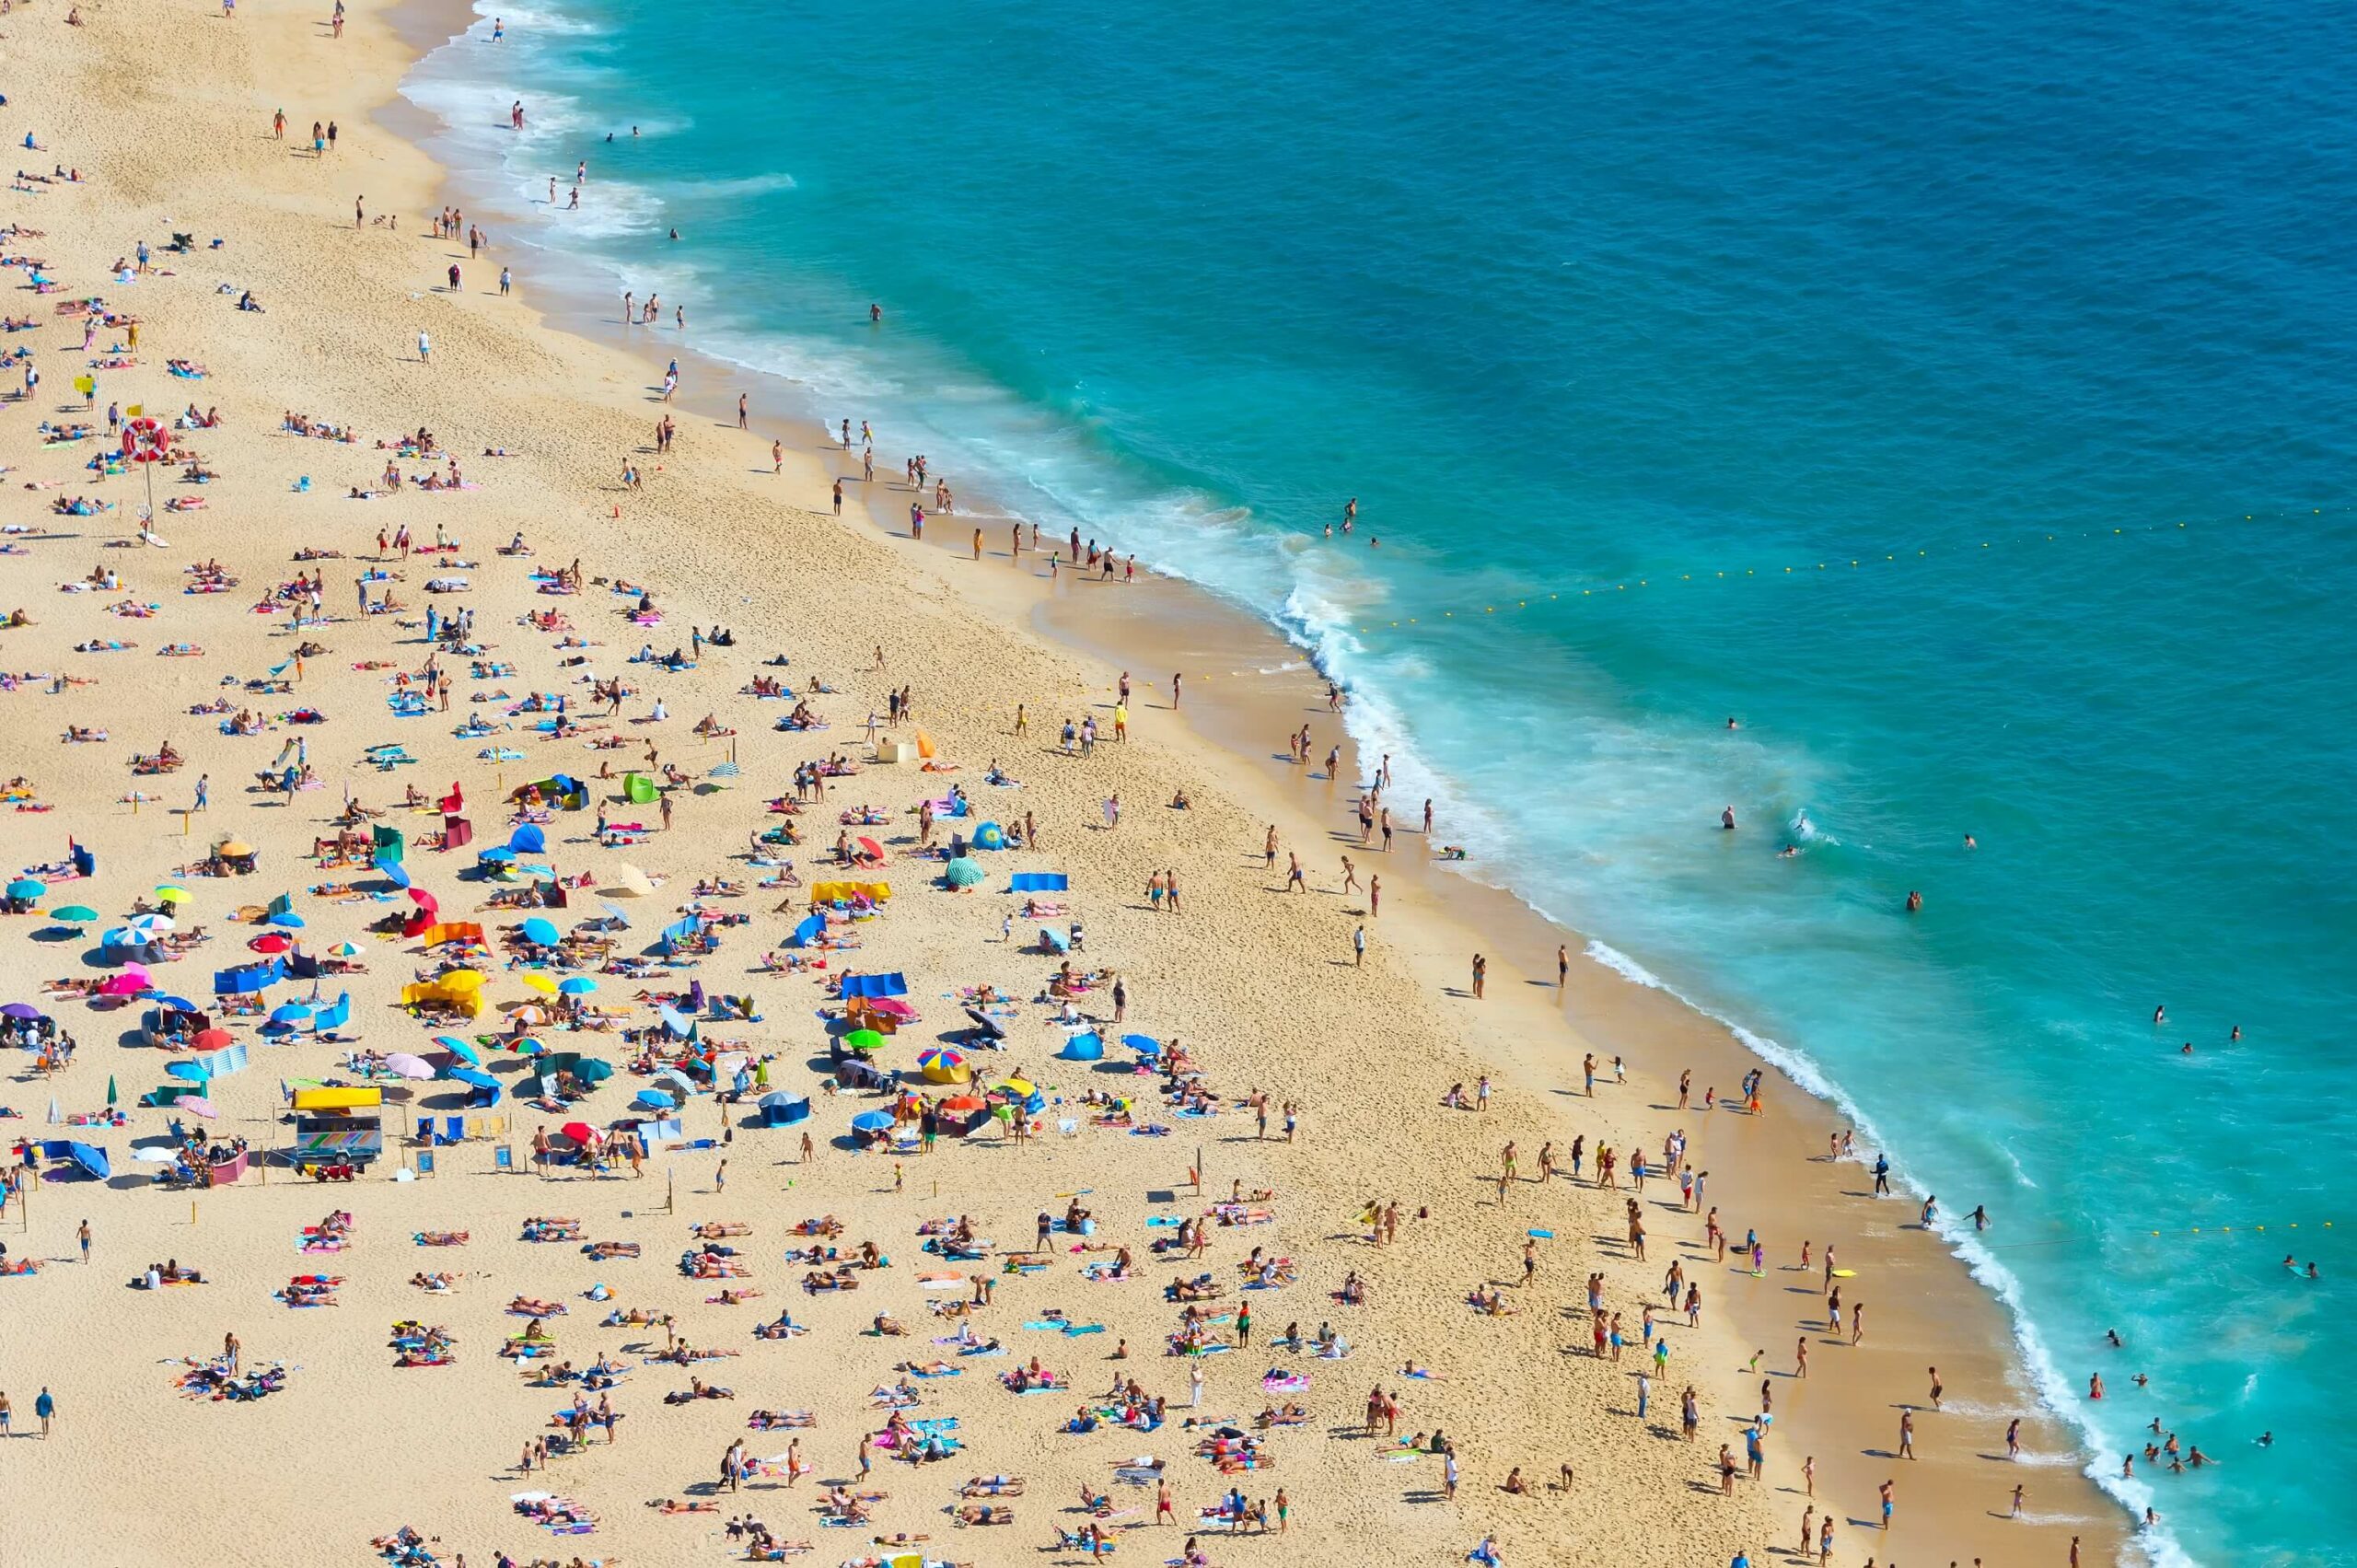 Enjoy the sandy beaches on your next beach holiday.